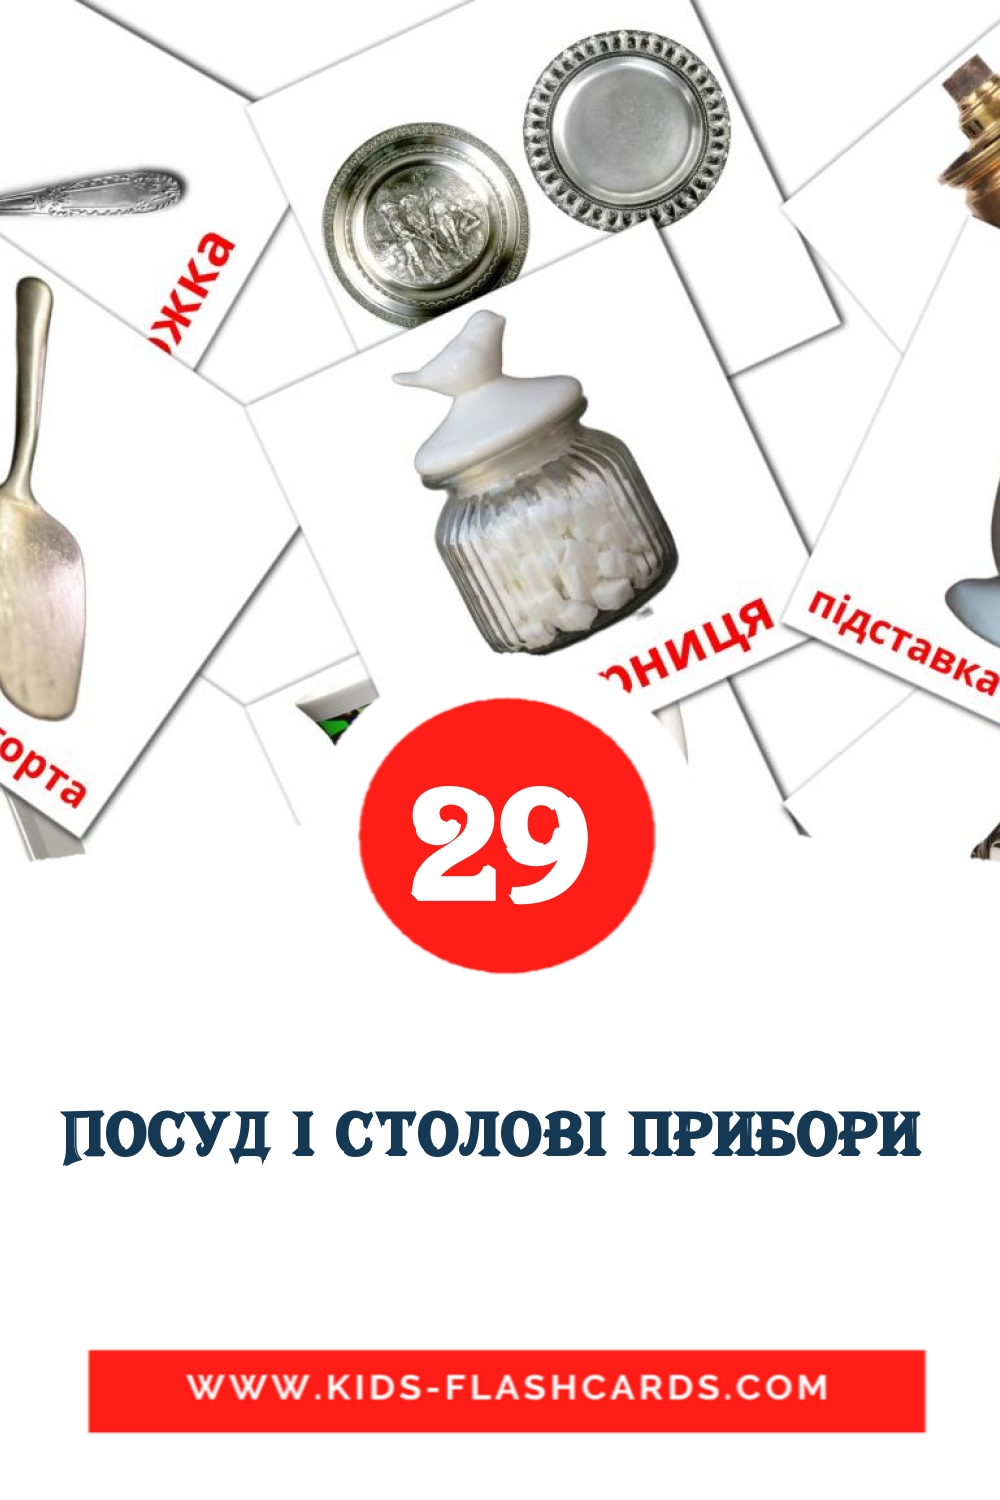 Посуд i столовi прибори  на украинском для Детского Сада (29 карточек)